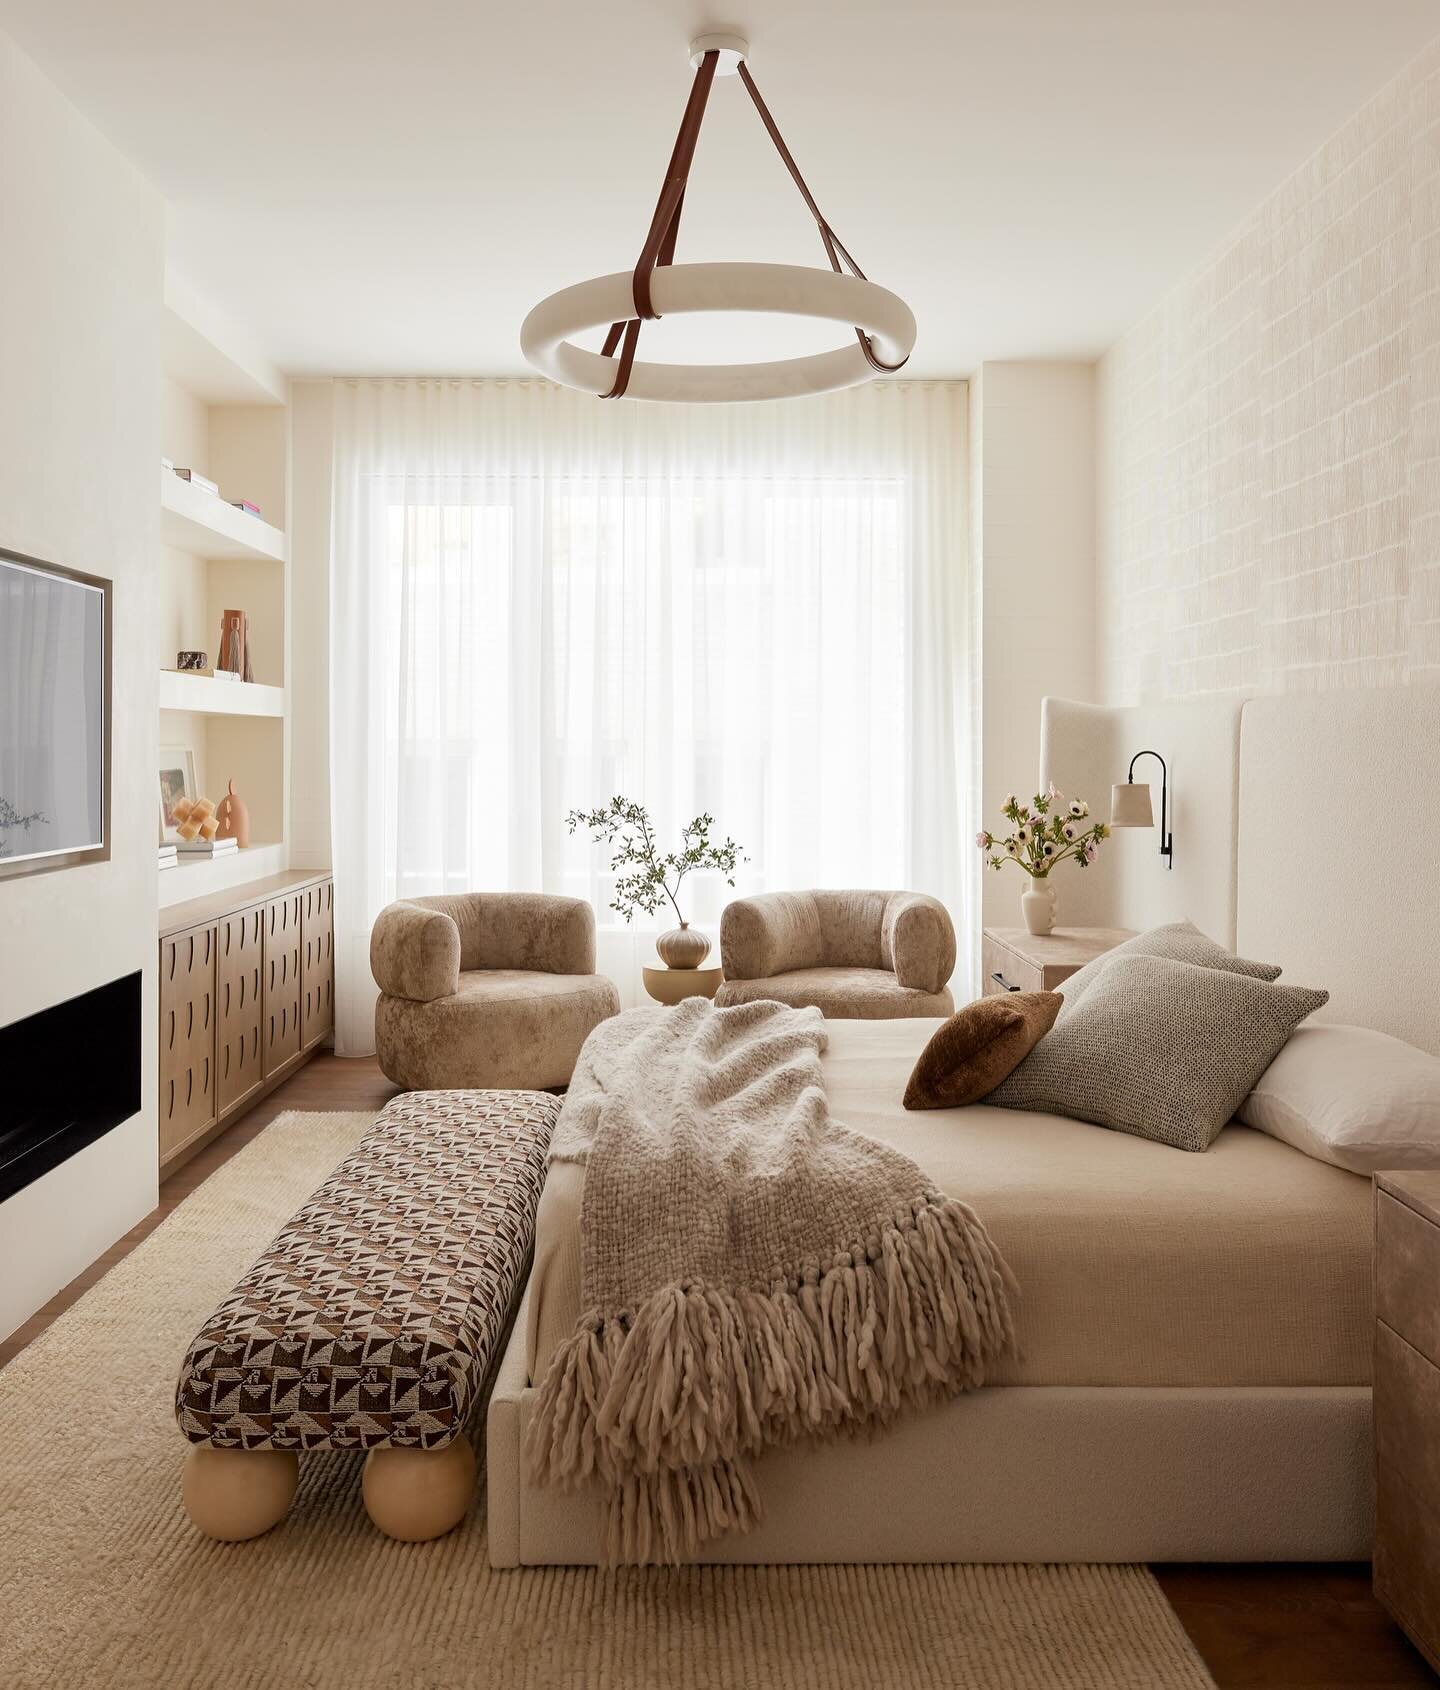 The dreamest bedroom

Interior design @alibuddinteriors 
Photo @twilliamsphoto 
Styling @aspoonfulofbenjamin